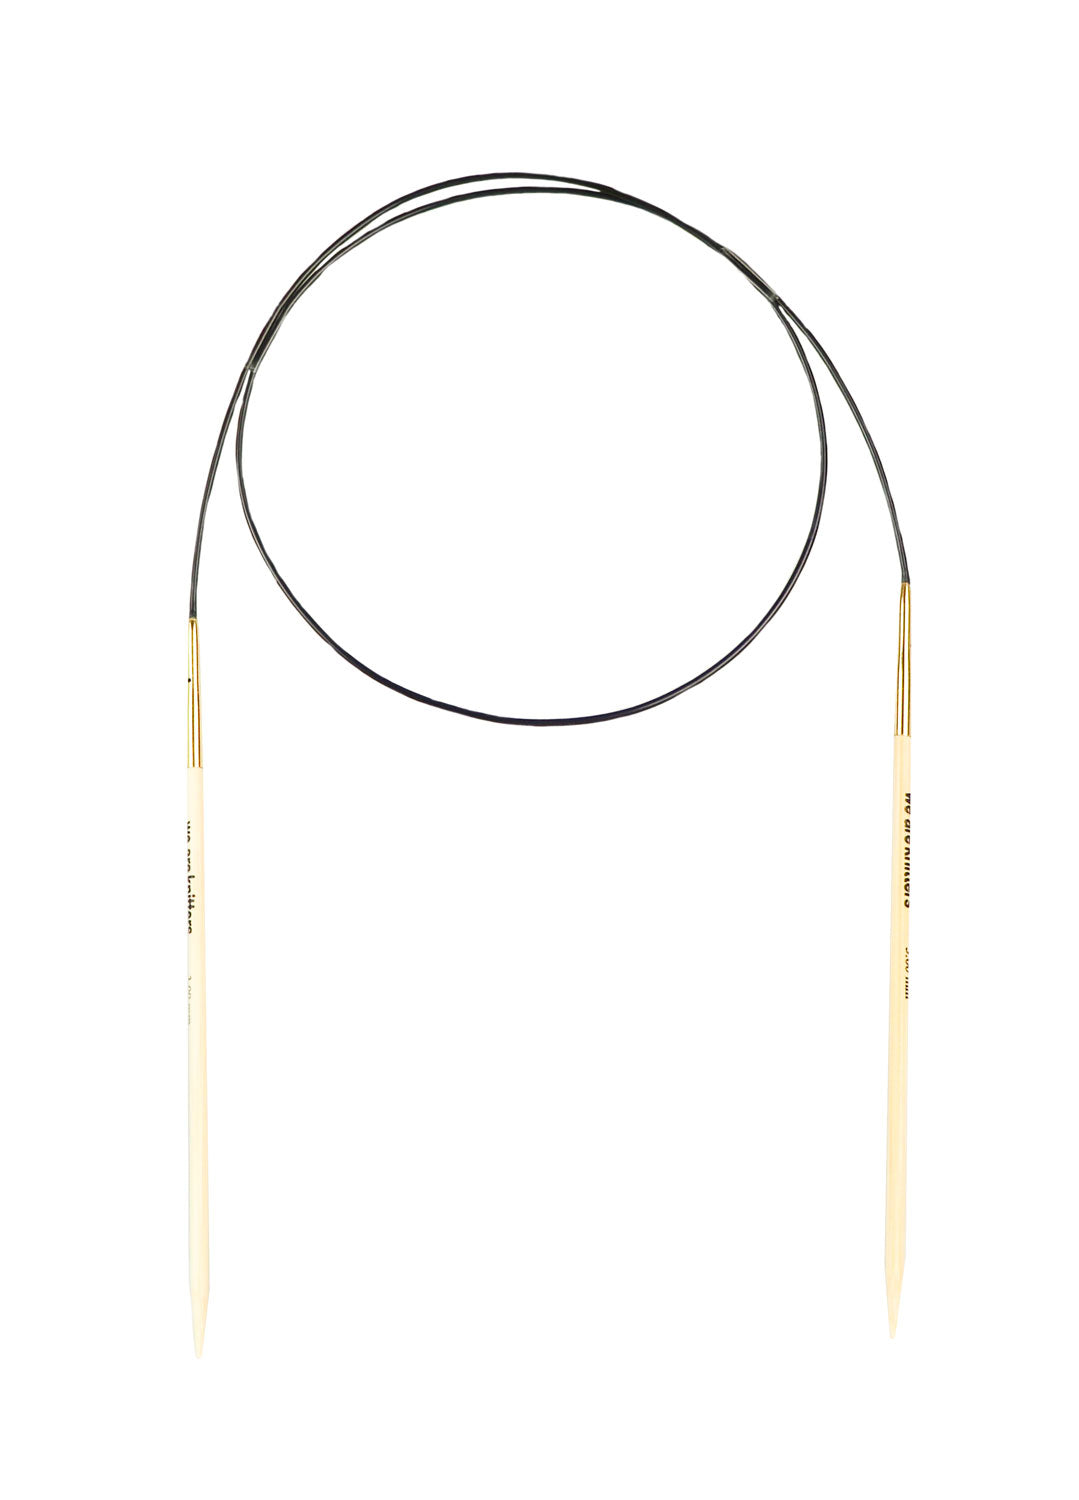 Addi Circular 6mm Knitting Needle 100cm Length 